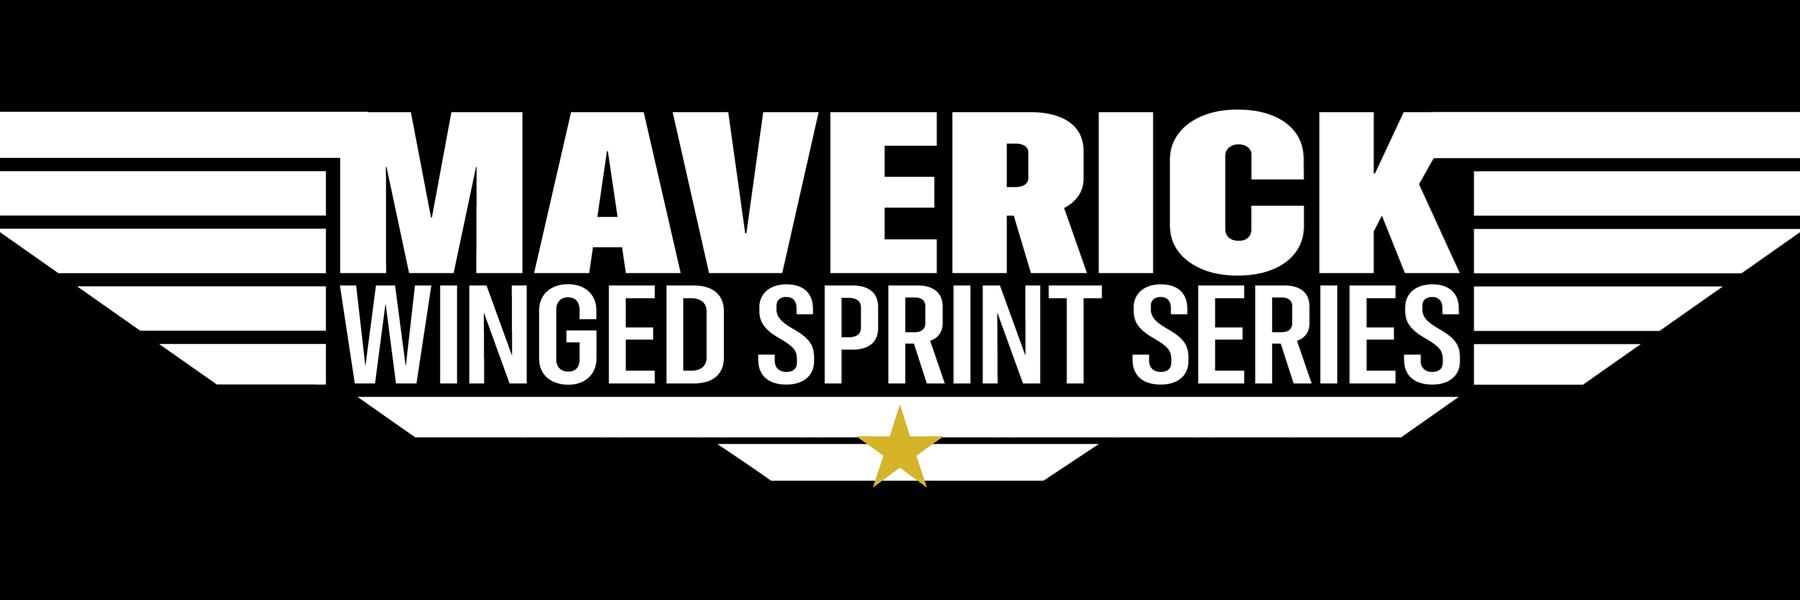 Maverick Winged Sprint Car Series